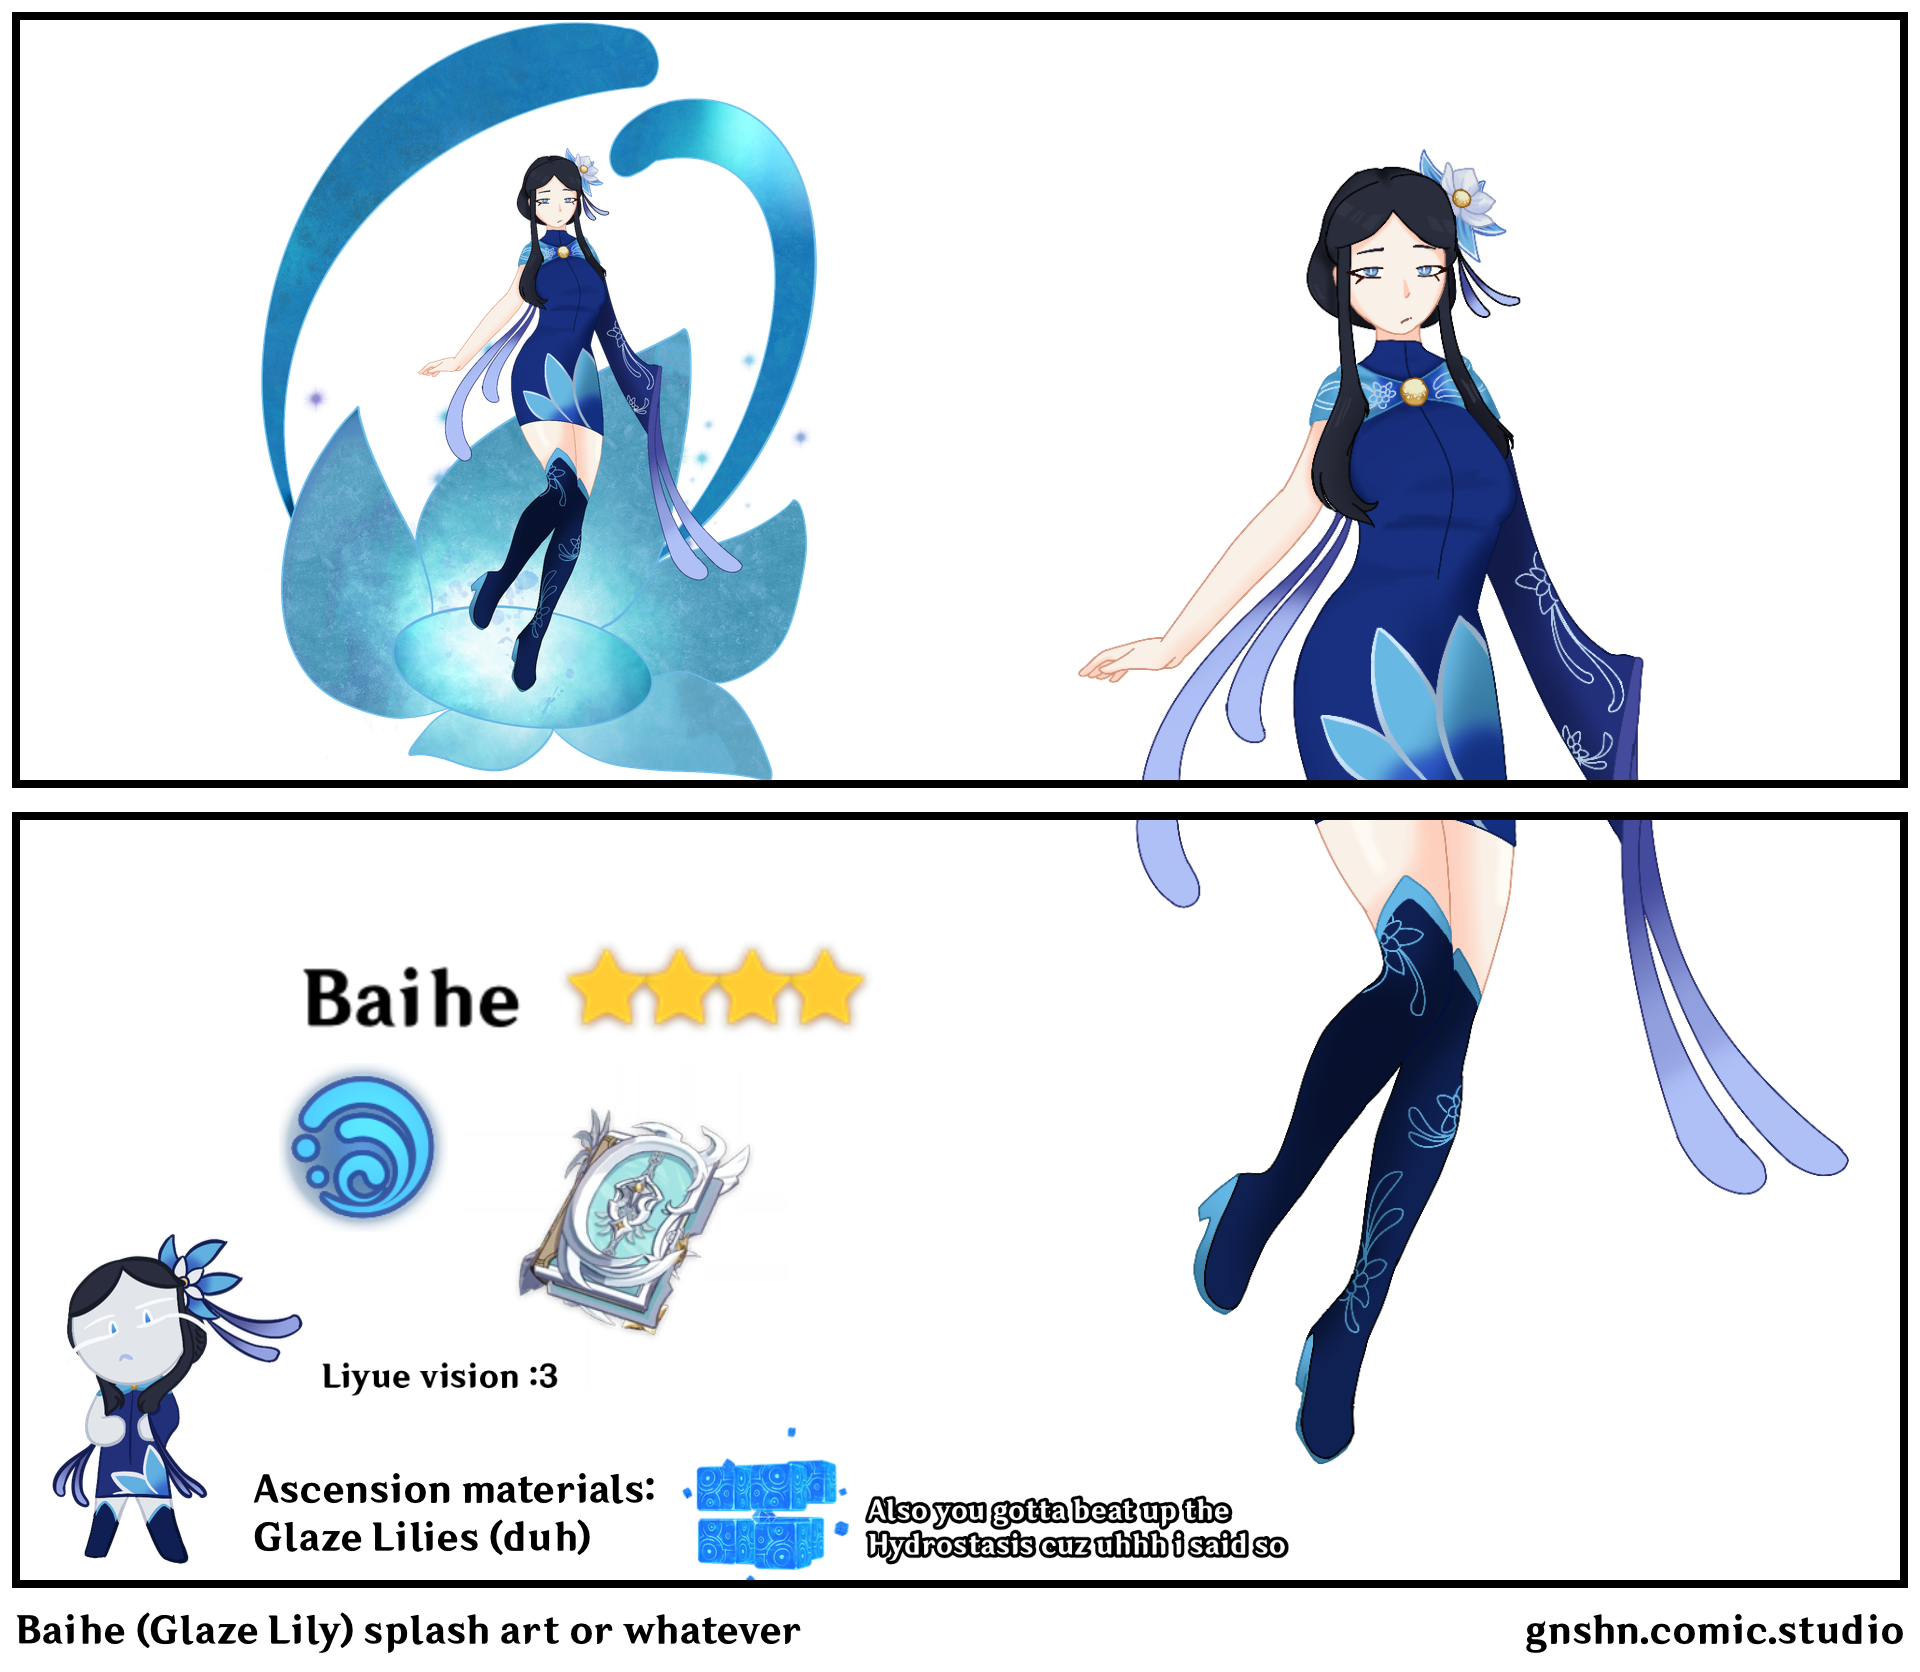 Baihe (Glaze Lily) splash art or whatever